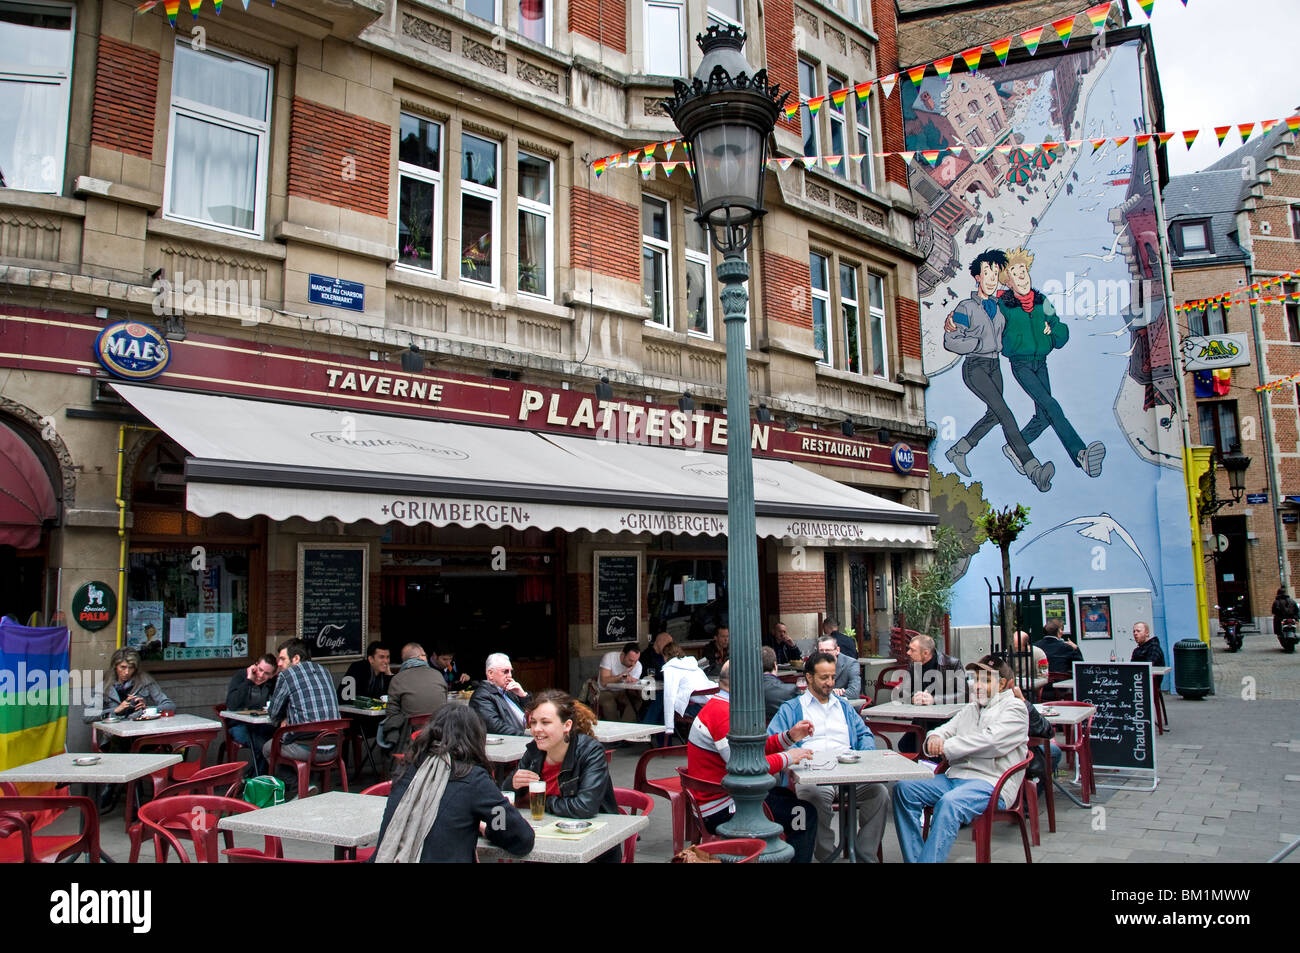 Cafe Plattestein pittura murale Marche Au Charbon - Kolenmarkt Bruxelles Belgio Foto Stock